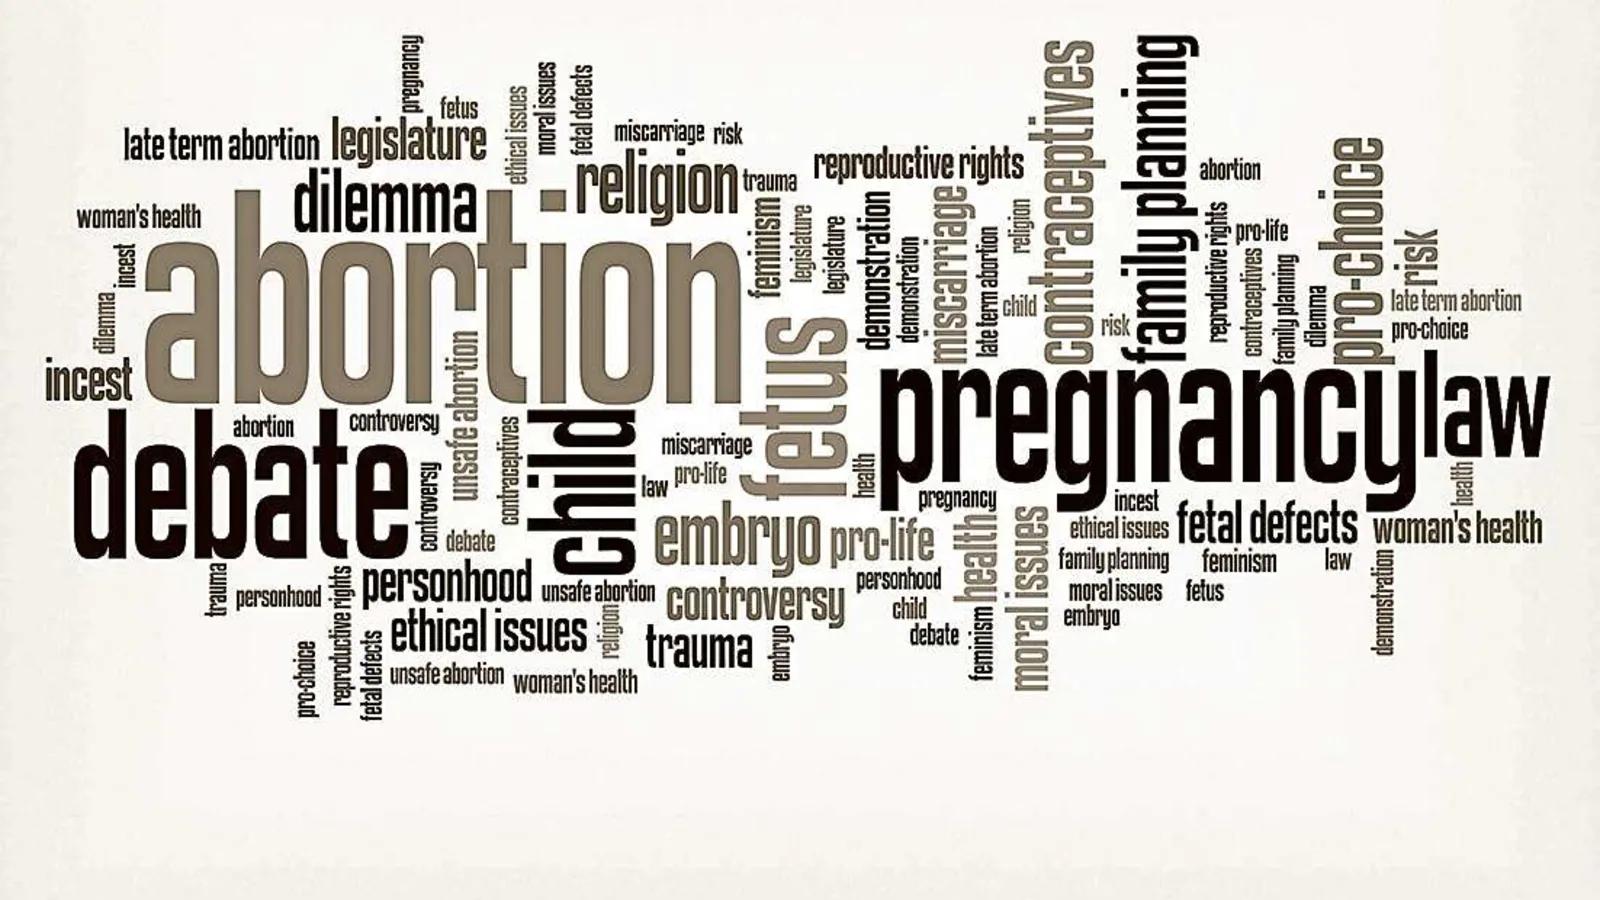 Abortion - a debate over women's body